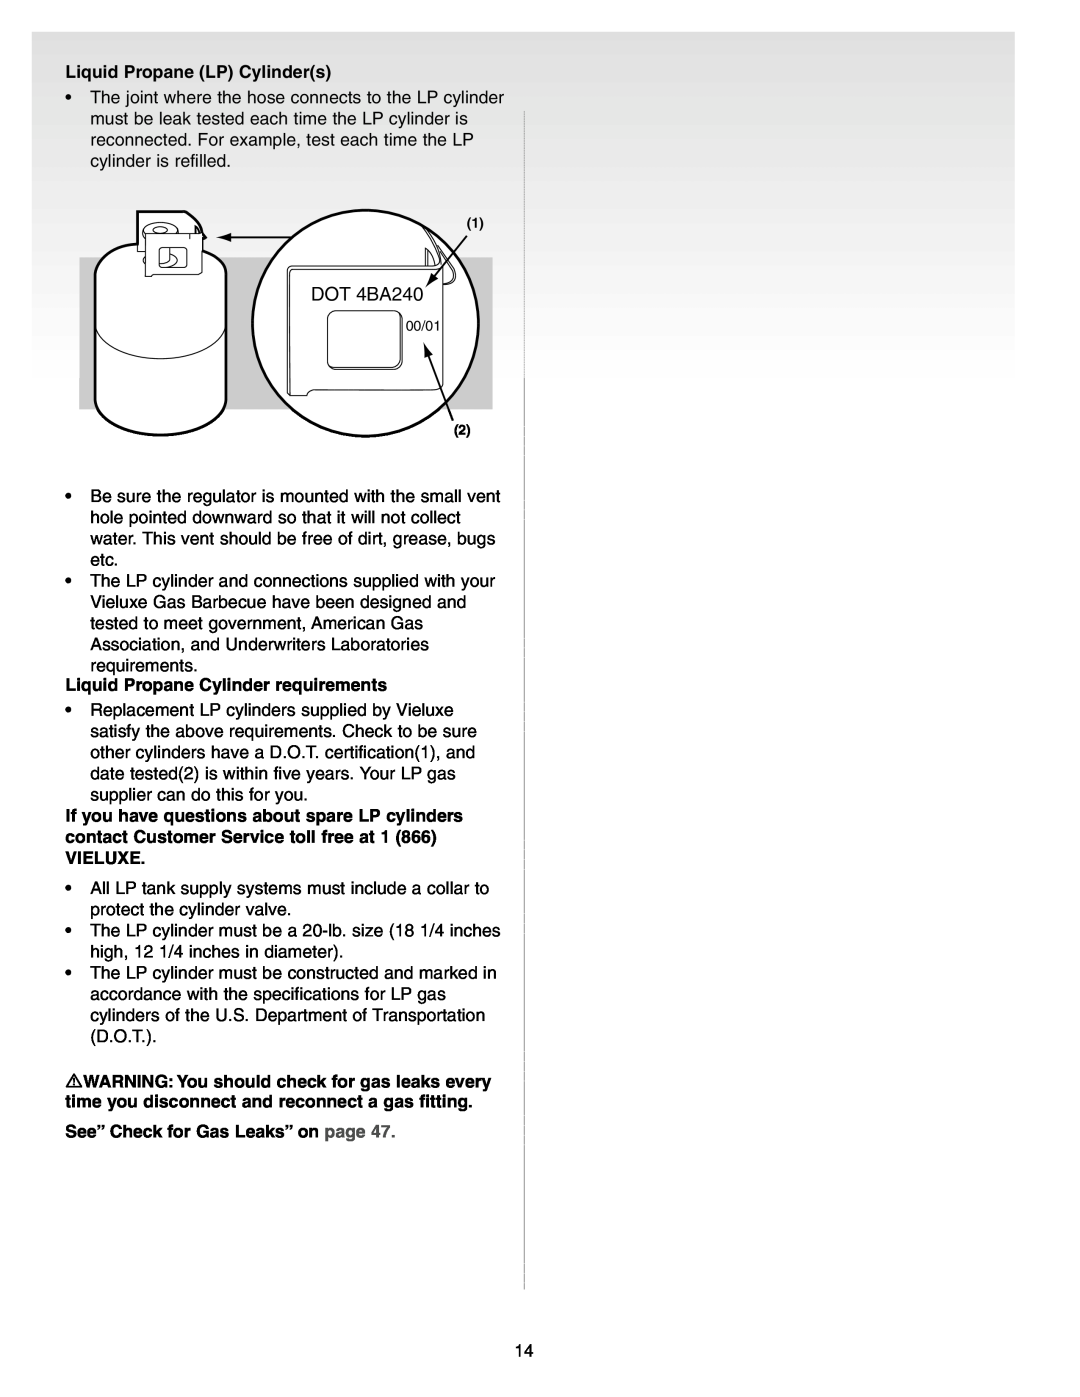 Weber Gas Burner manual DOT 4BA240, Liquid Propane LP Cylinders, Liquid Propane Cylinder requirements, Vieluxe 